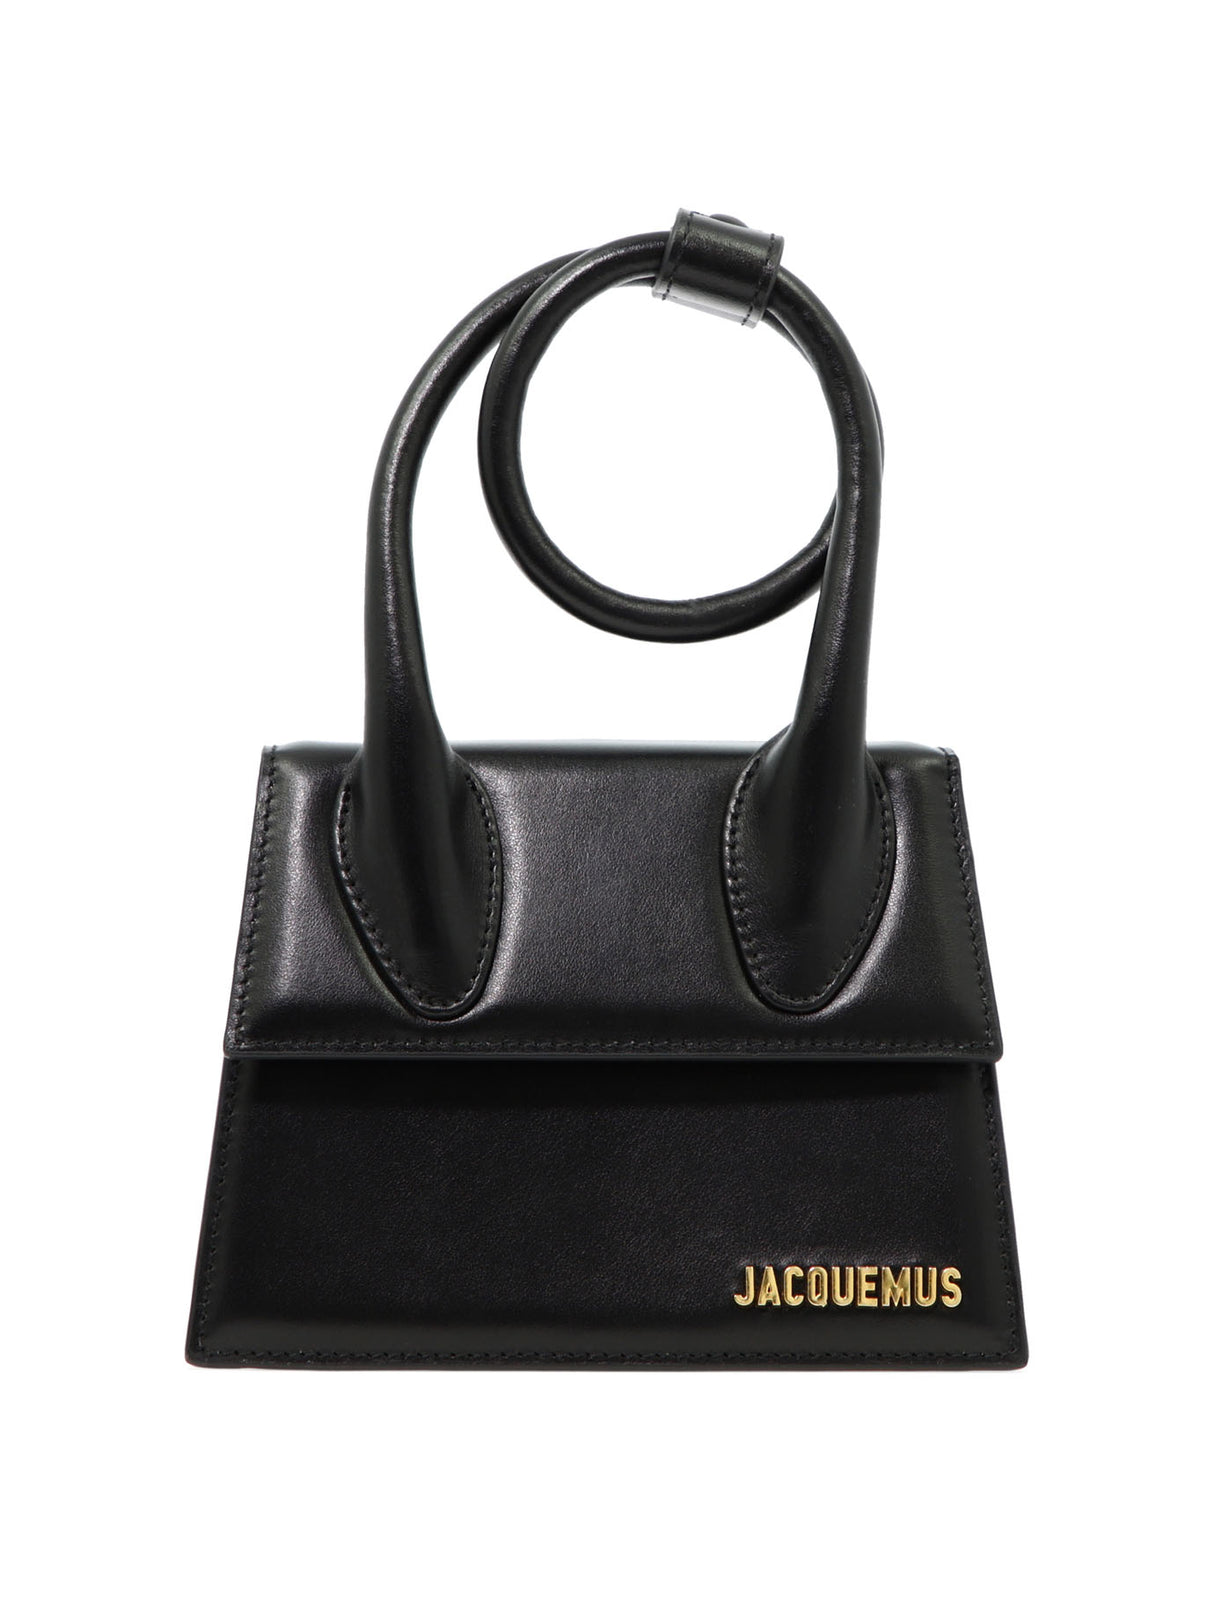 JACQUEMUS Sleek Mini Leather Handbag with Bow Detail for Women